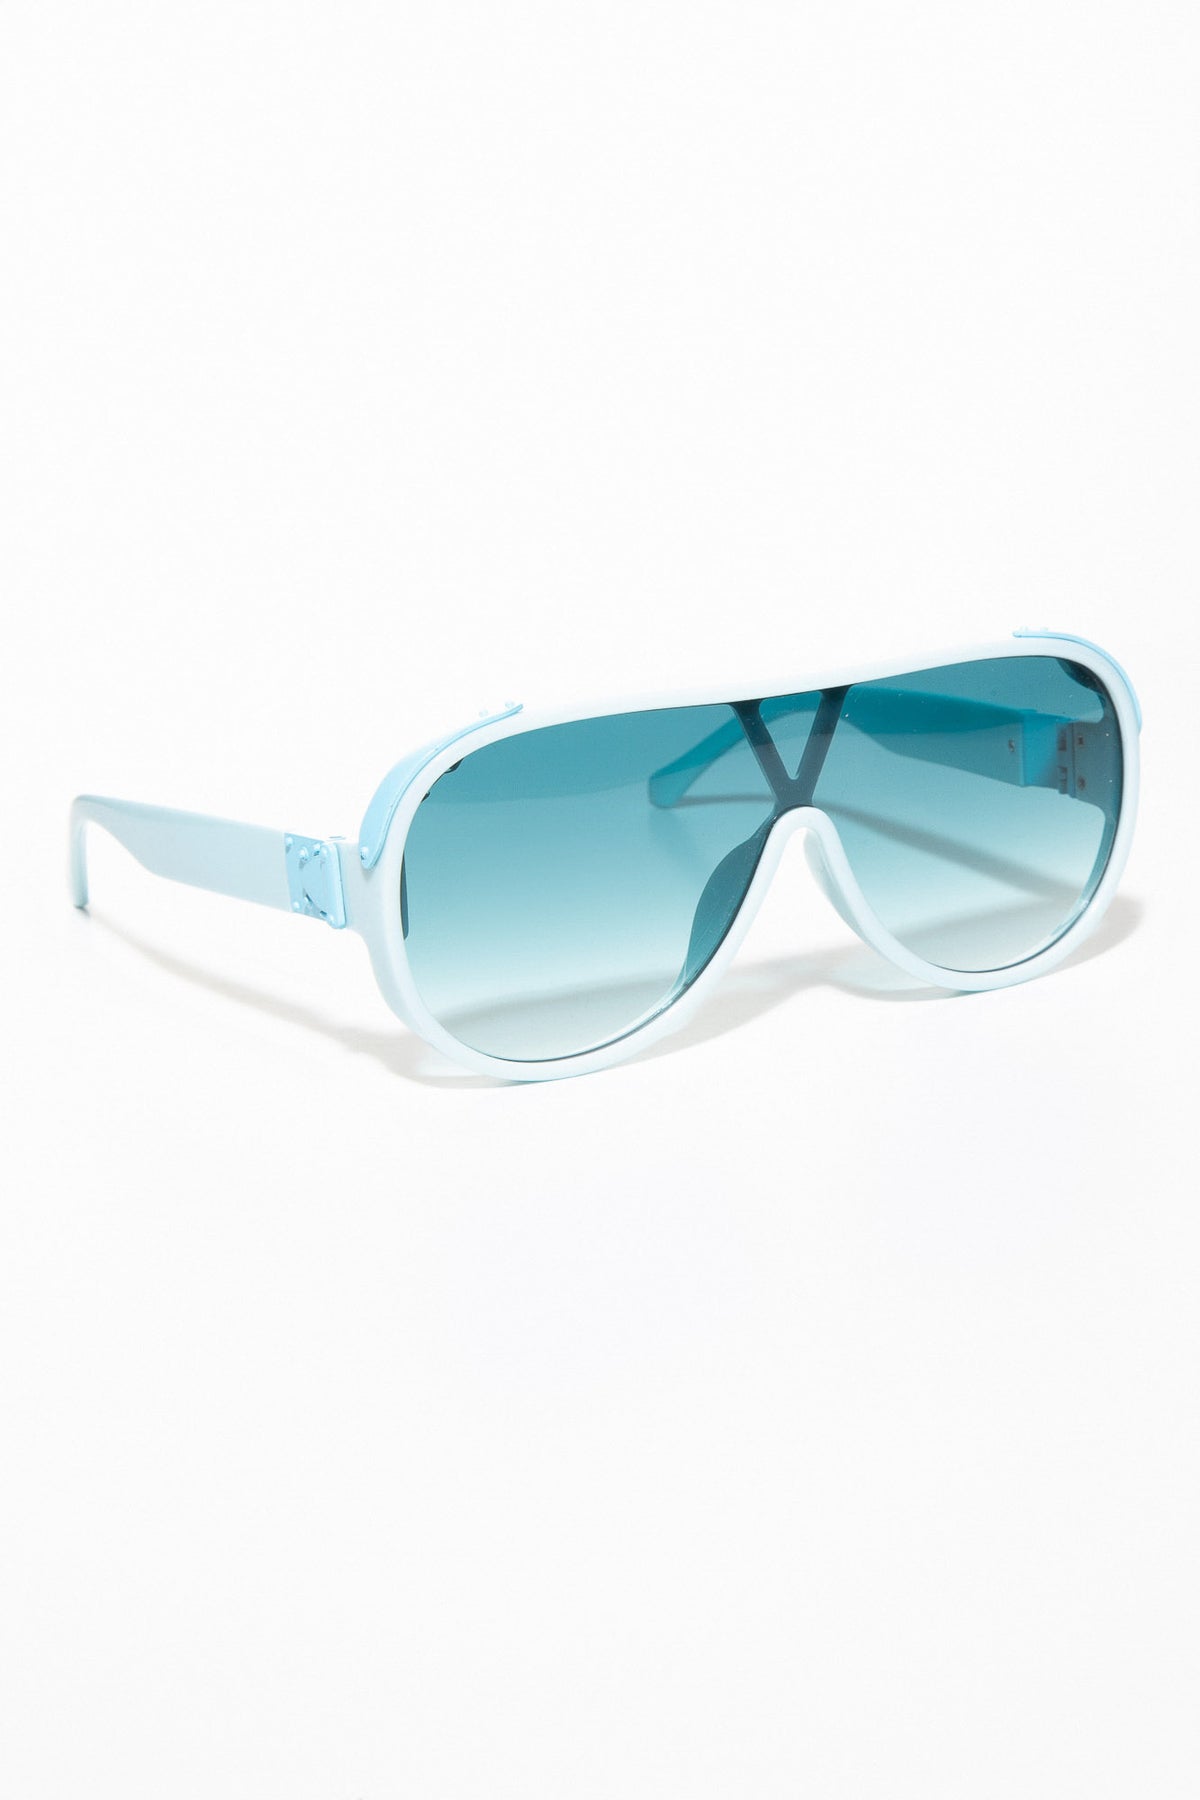 
              Blindside Colorful Shield Sunglasses - Blue - Swank A Posh
            